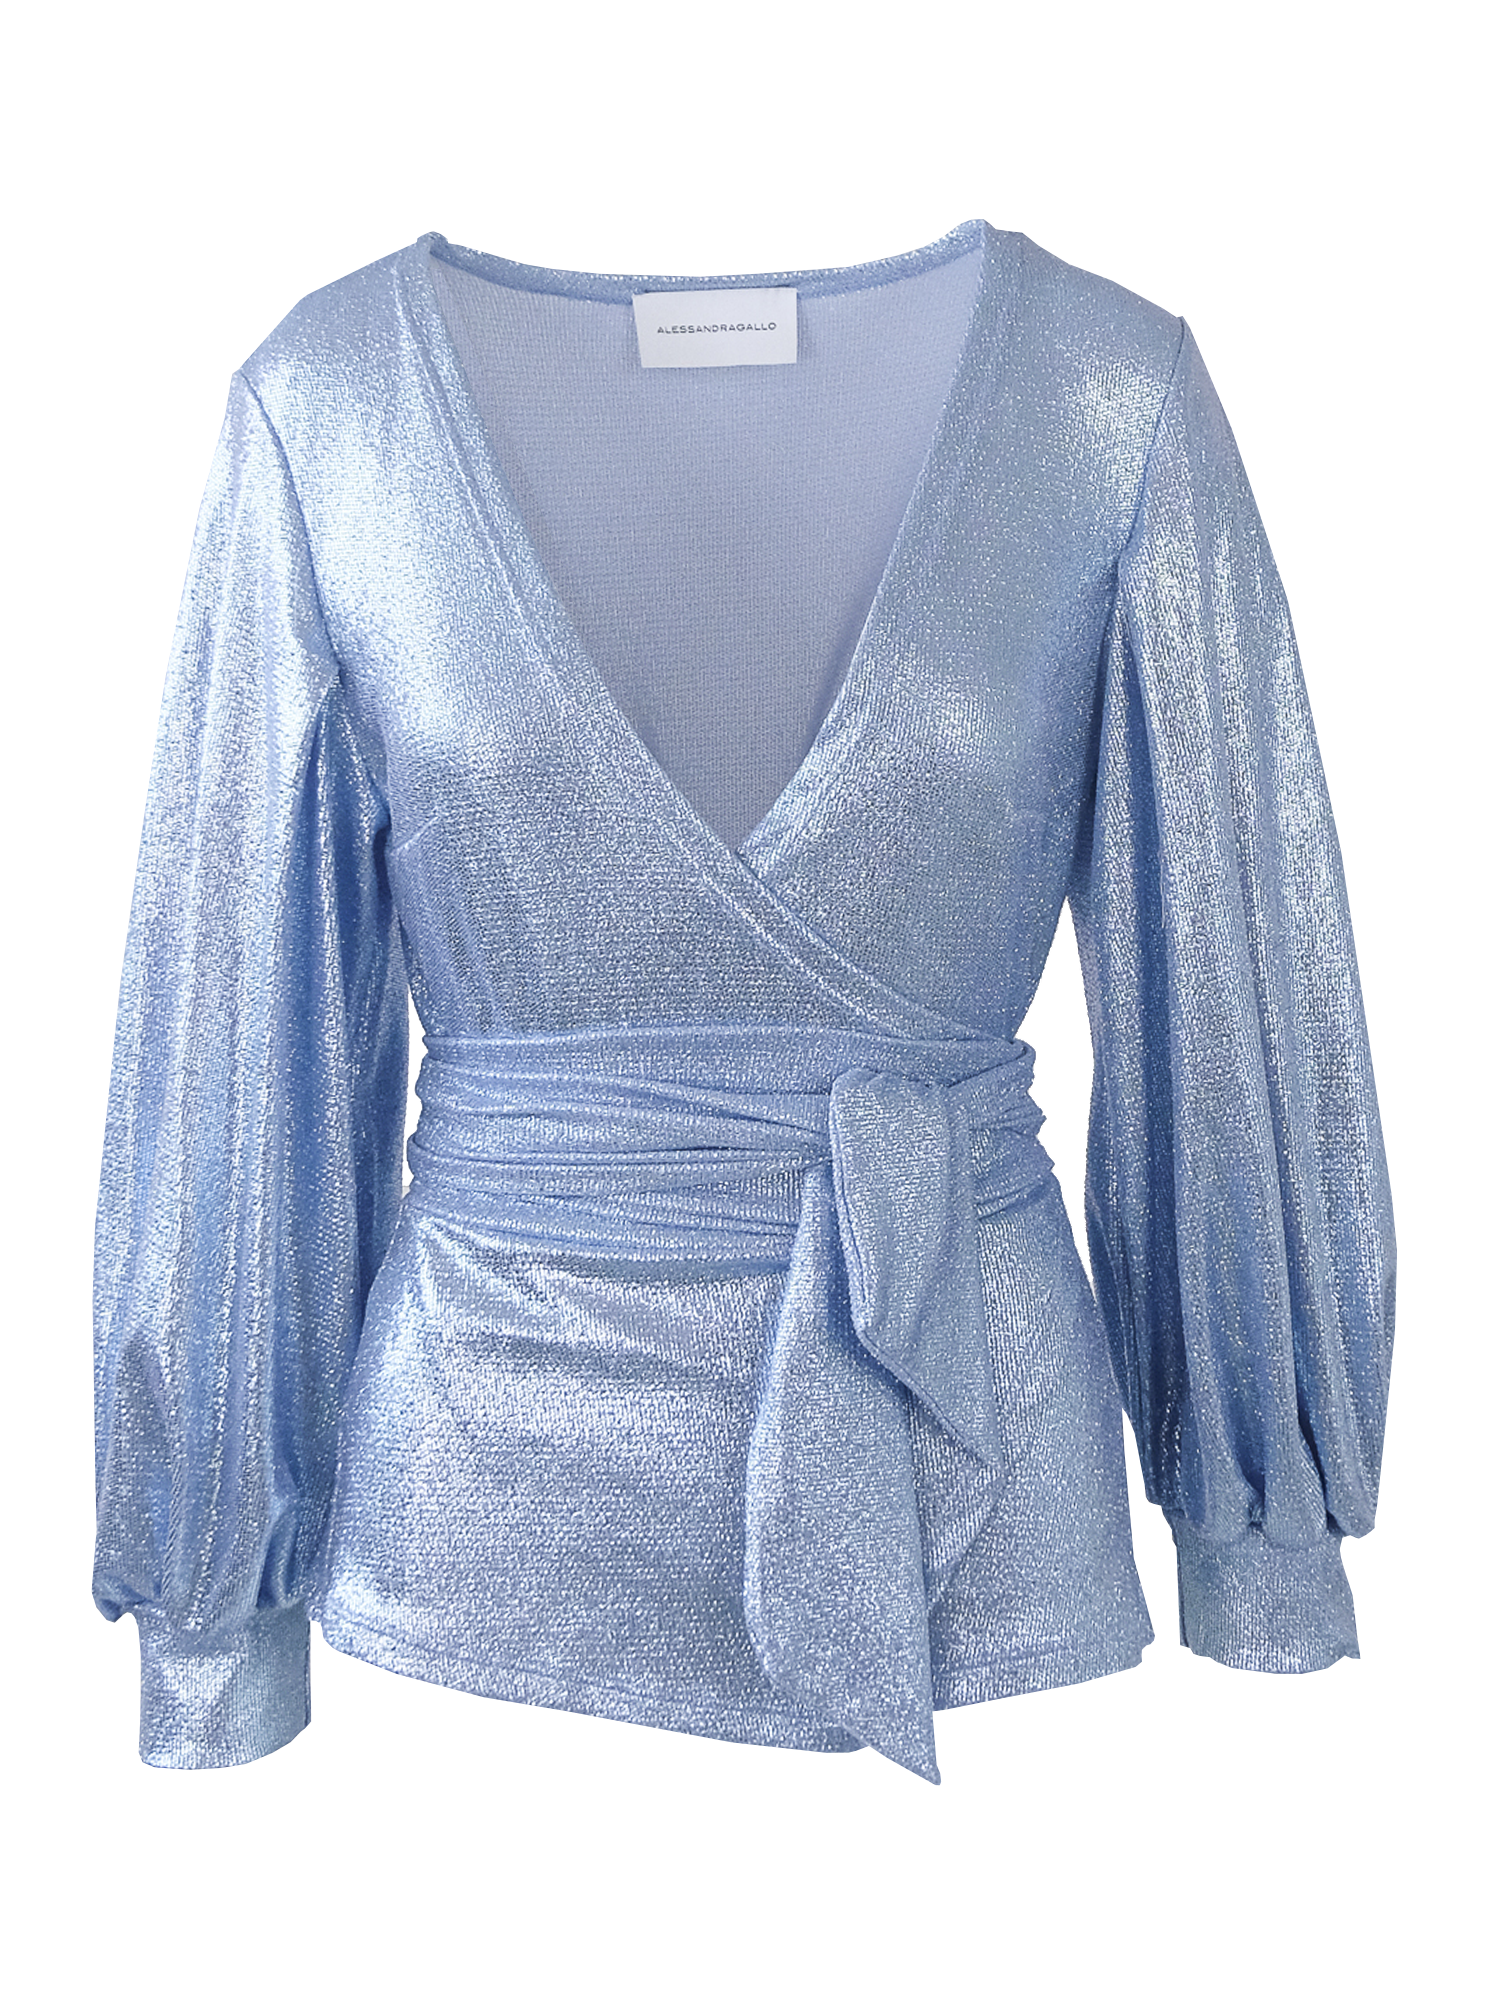 CLOE - kimono blouse in light blue lurex